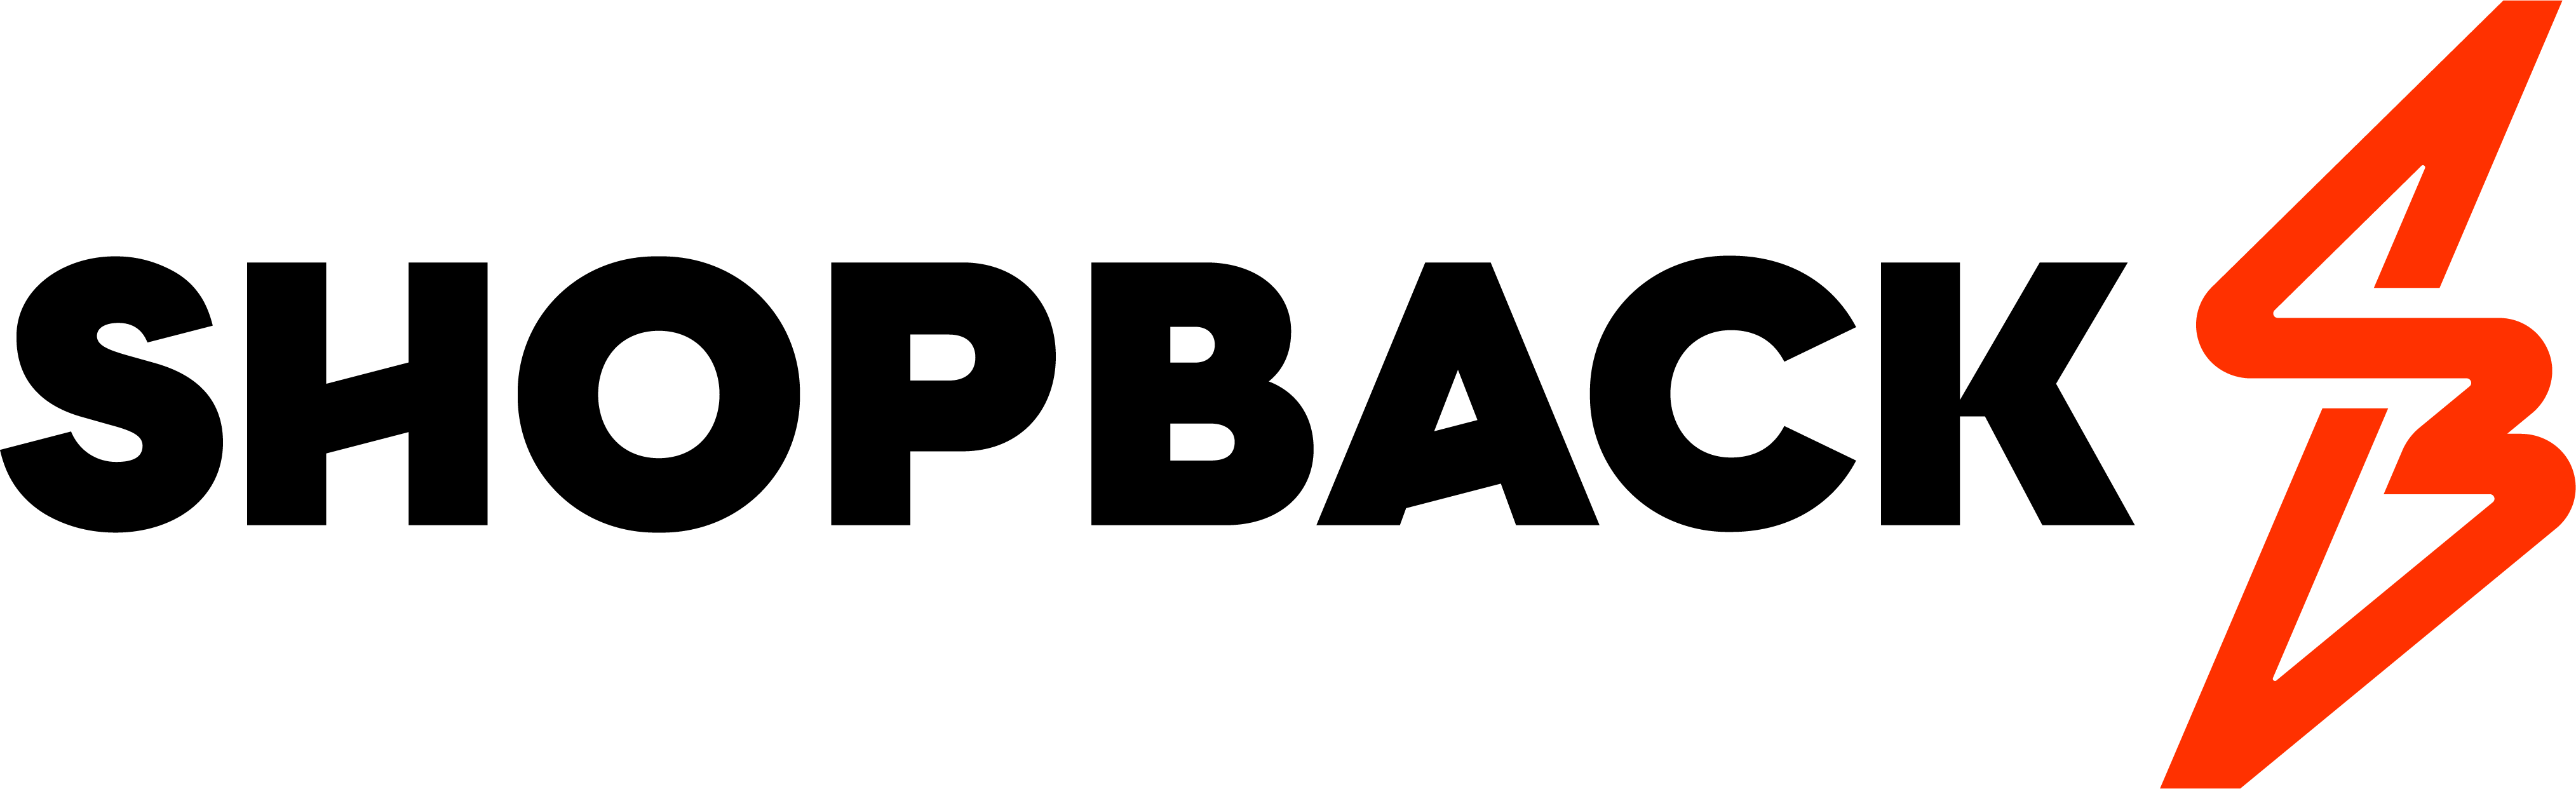 shopback-logo